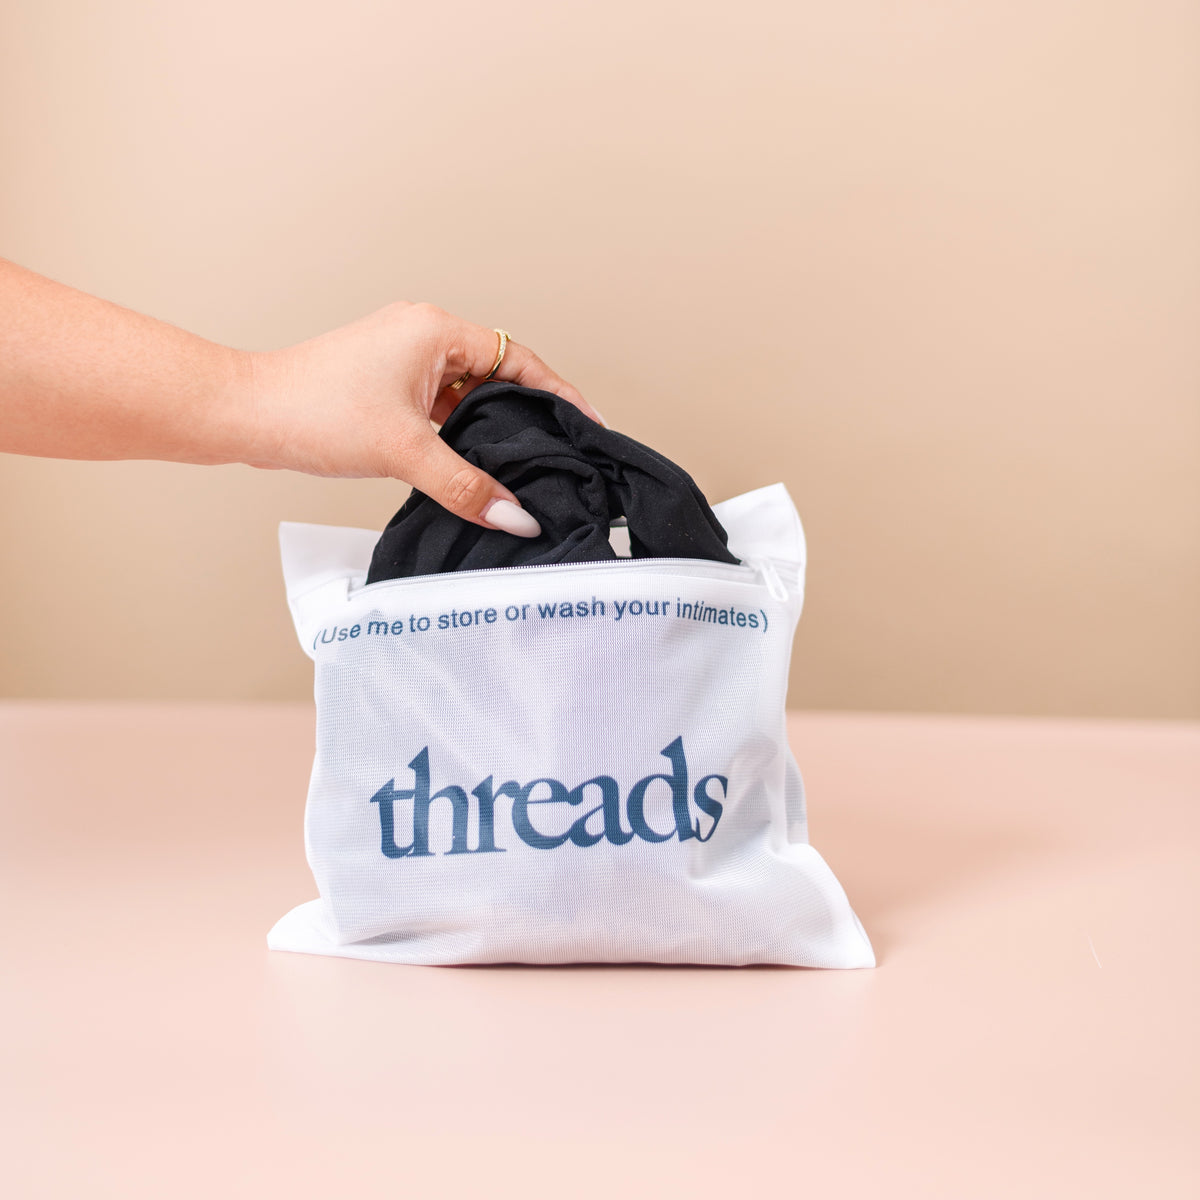 Threads Intimates Storage & Wash Bag